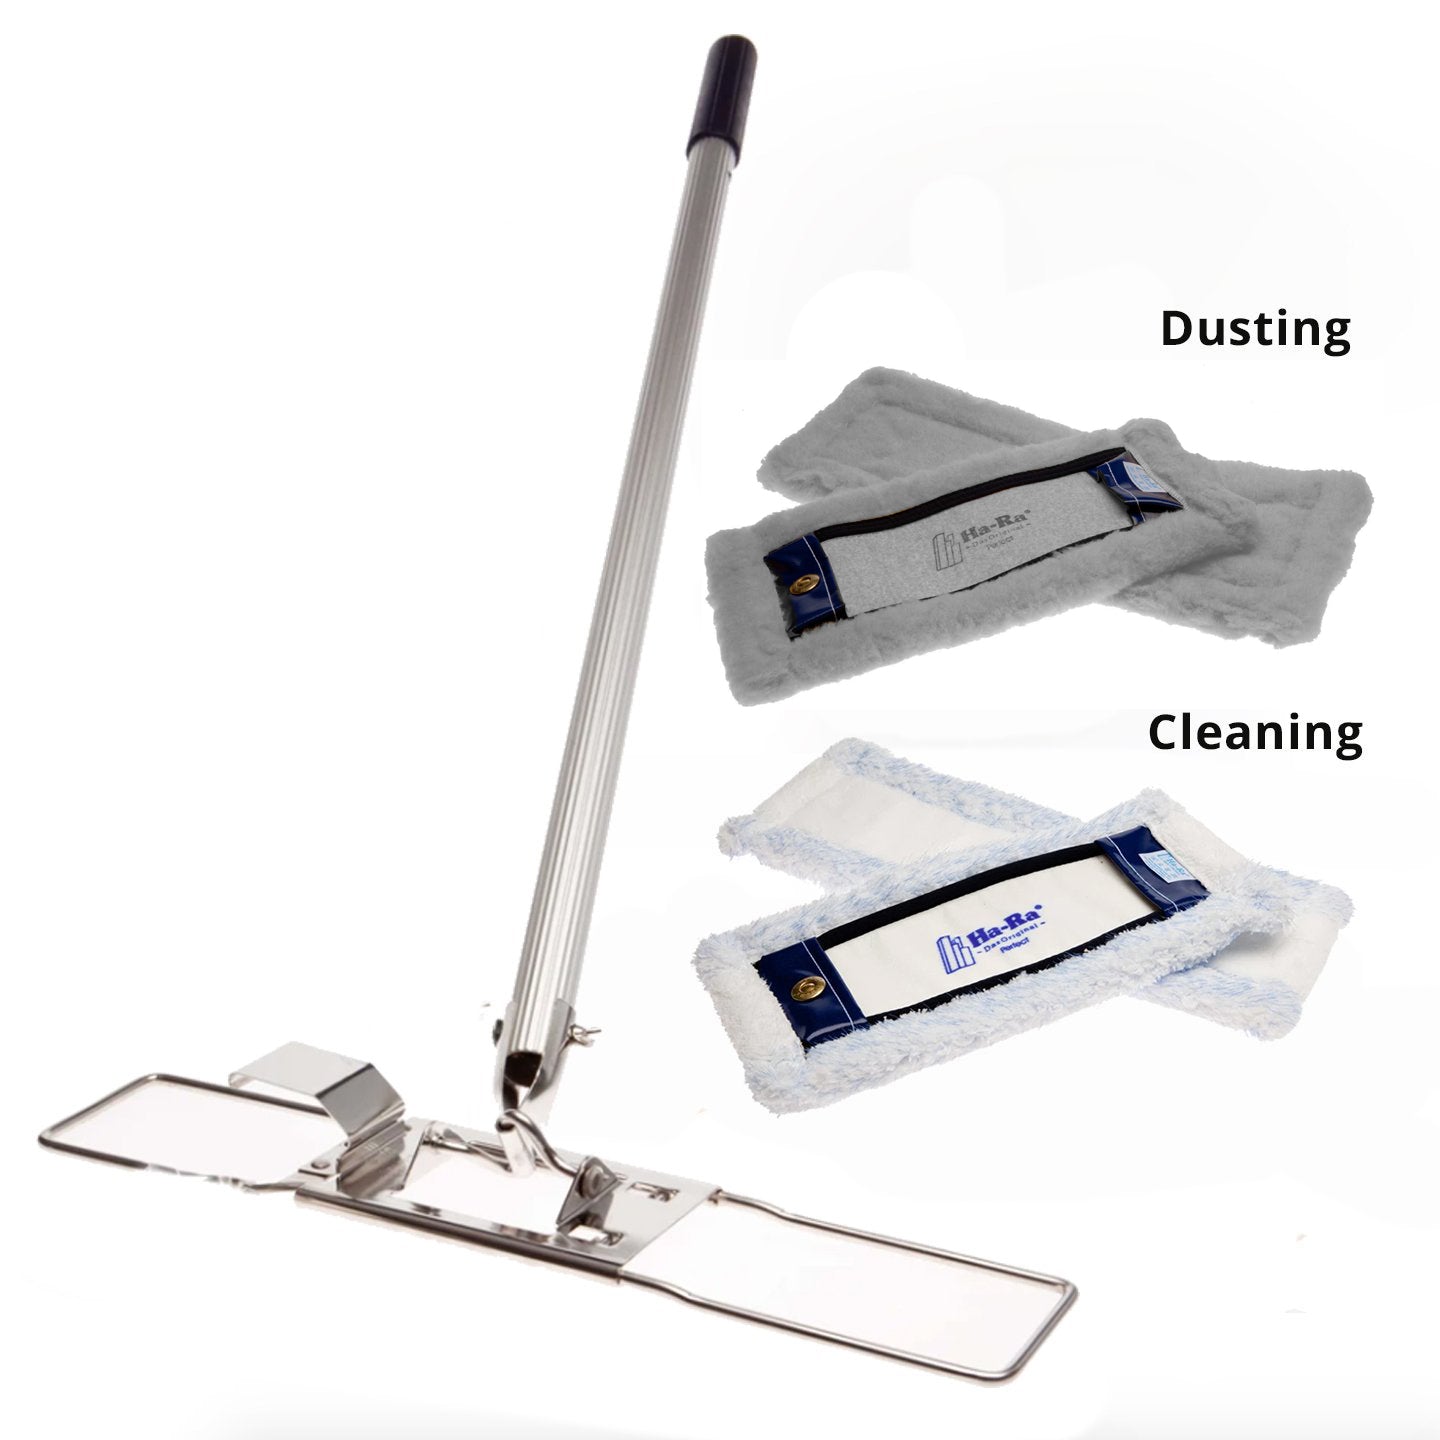 Equipment to Clean Floors